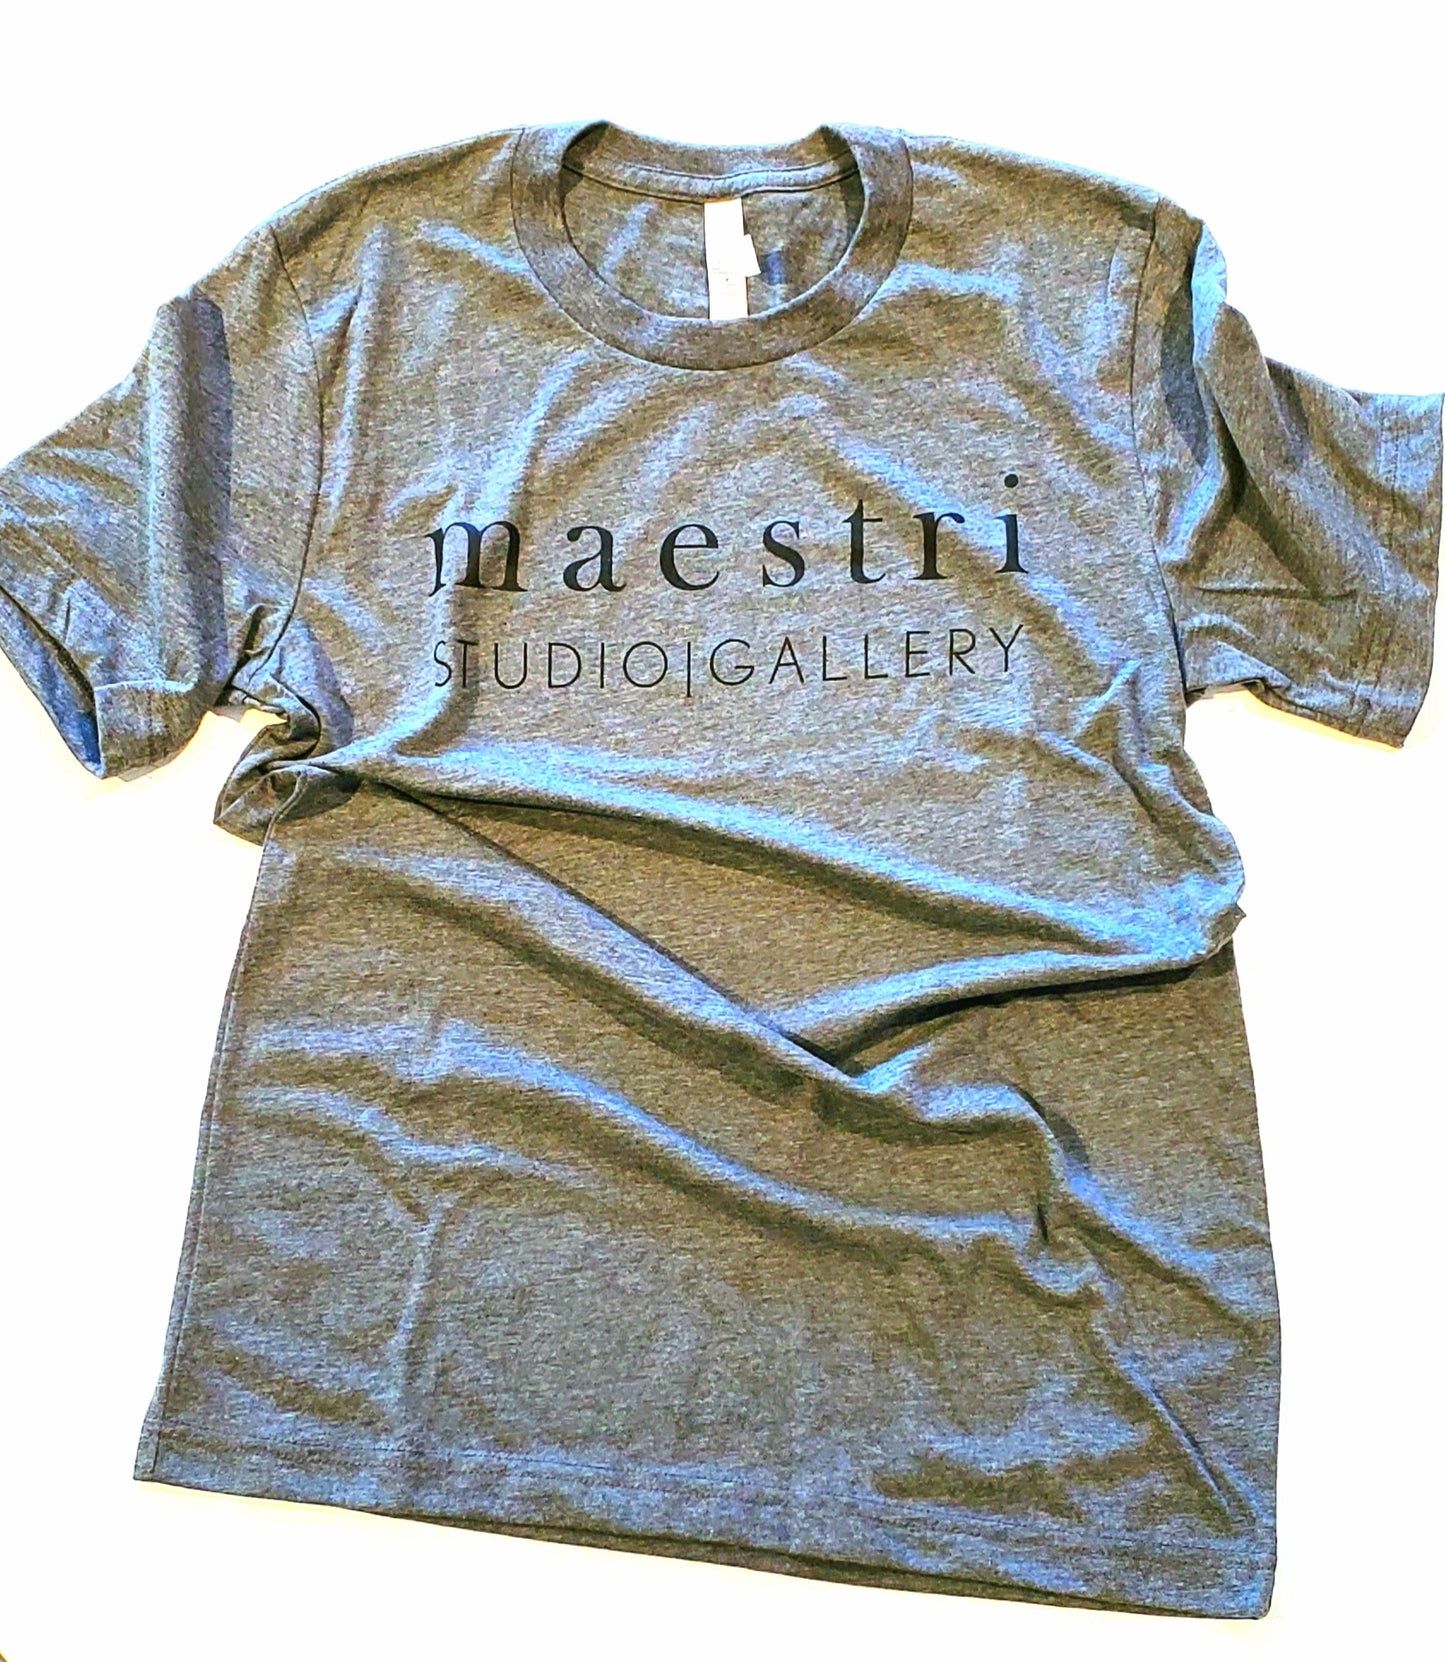 Maestri Studio & Gallery T-Shirts